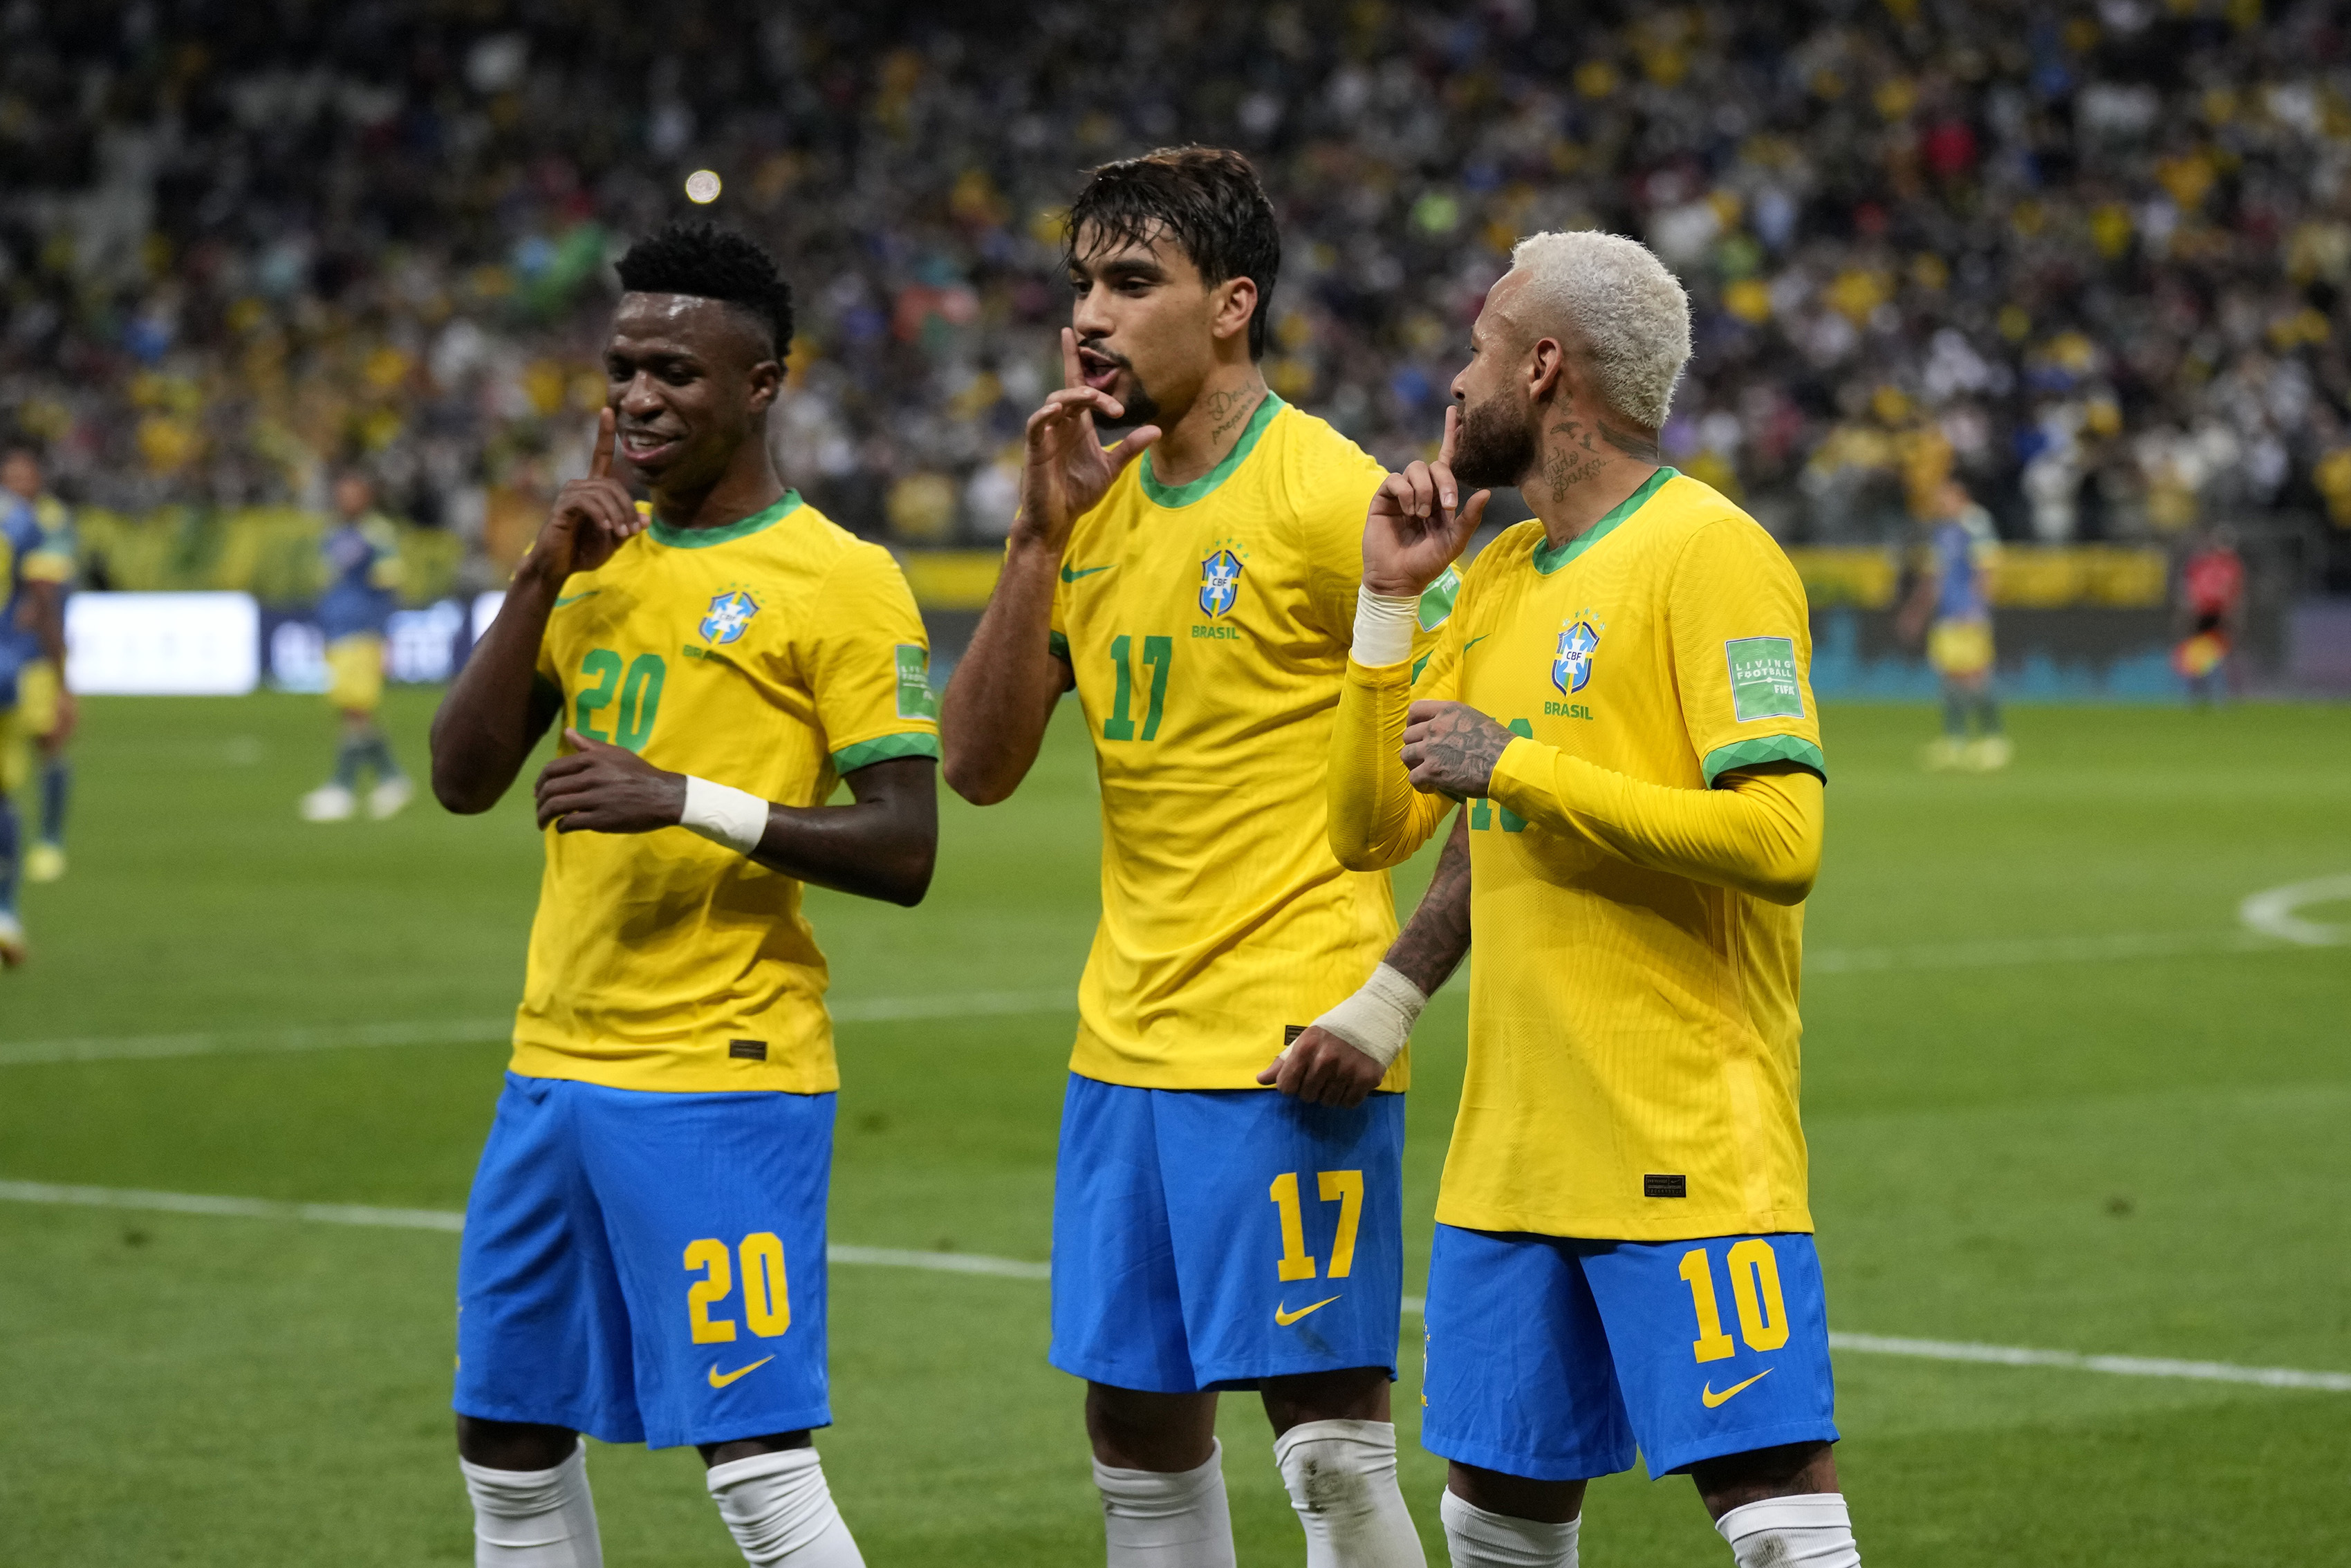 Richarlison racially abused in Brazil's win over Tunisia - World Soccer Talk